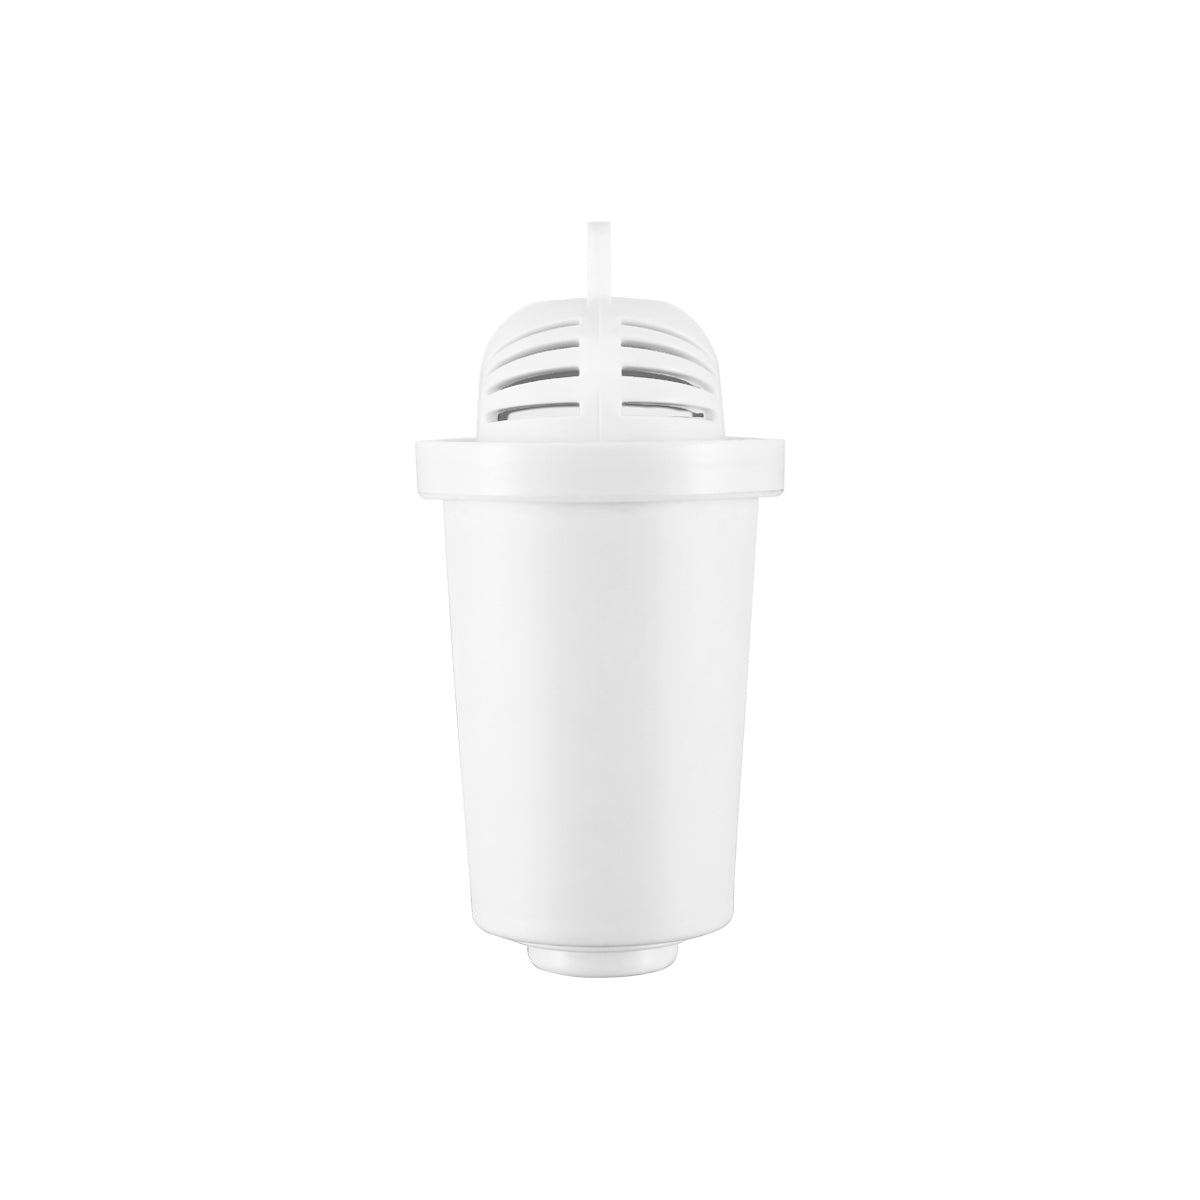 Midea Water Filter Jug (White)